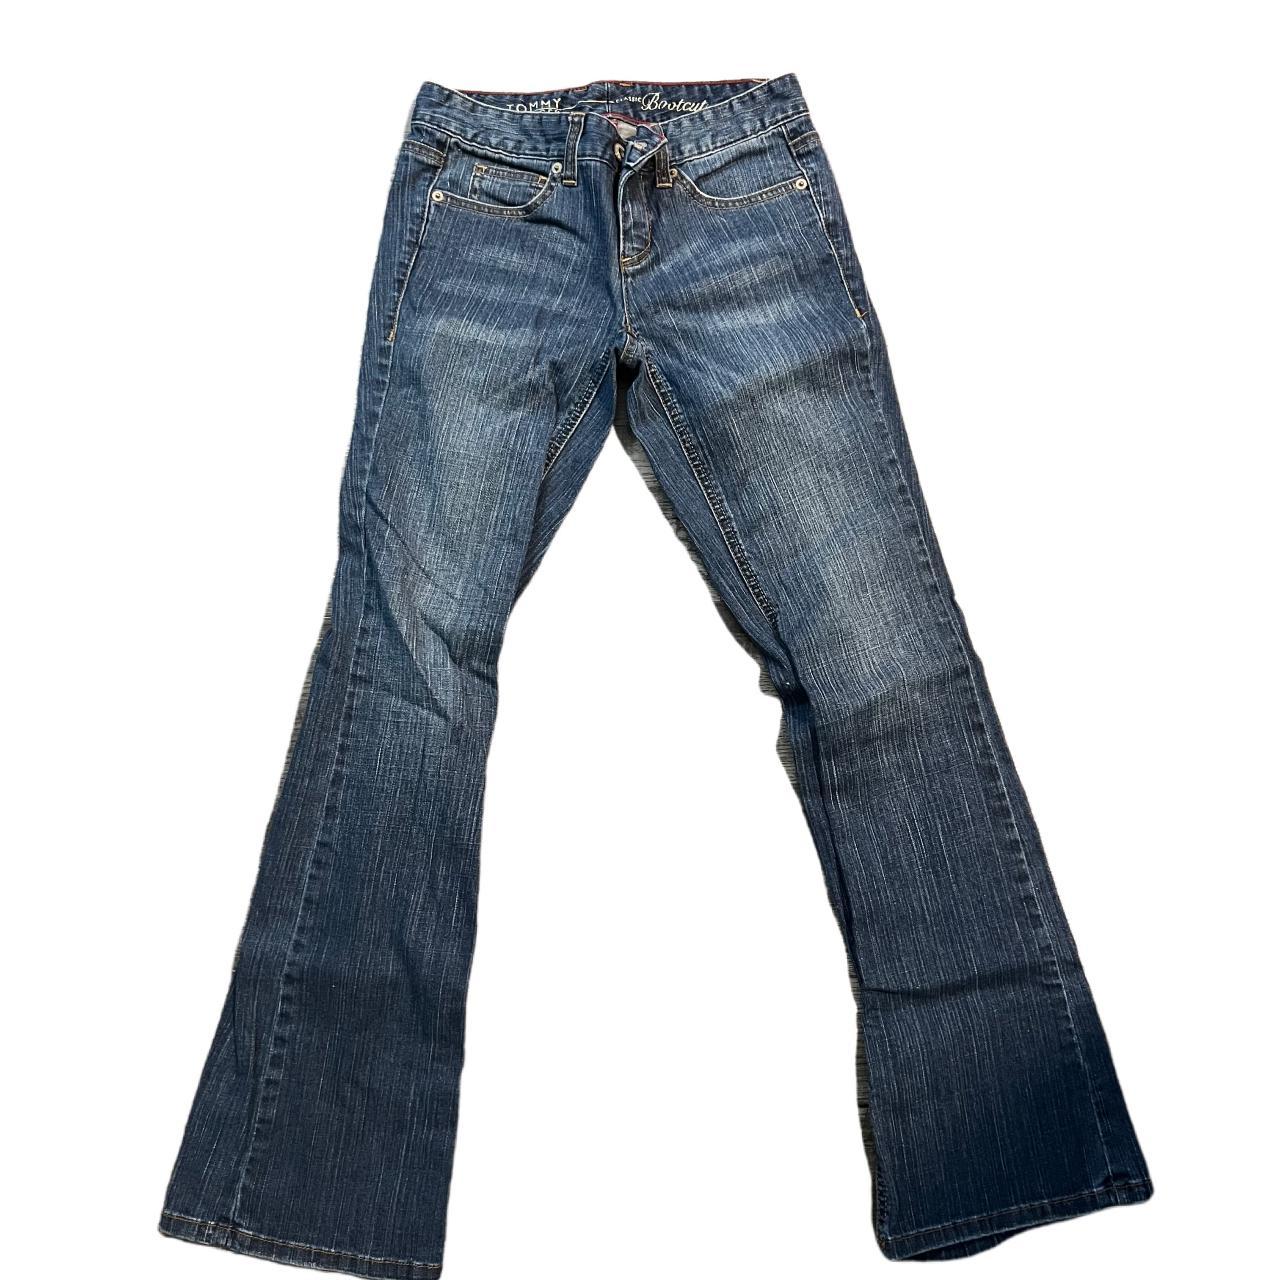 Tommy Hilfiger Vintage Bootcut Jeans Low rise dark... - Depop